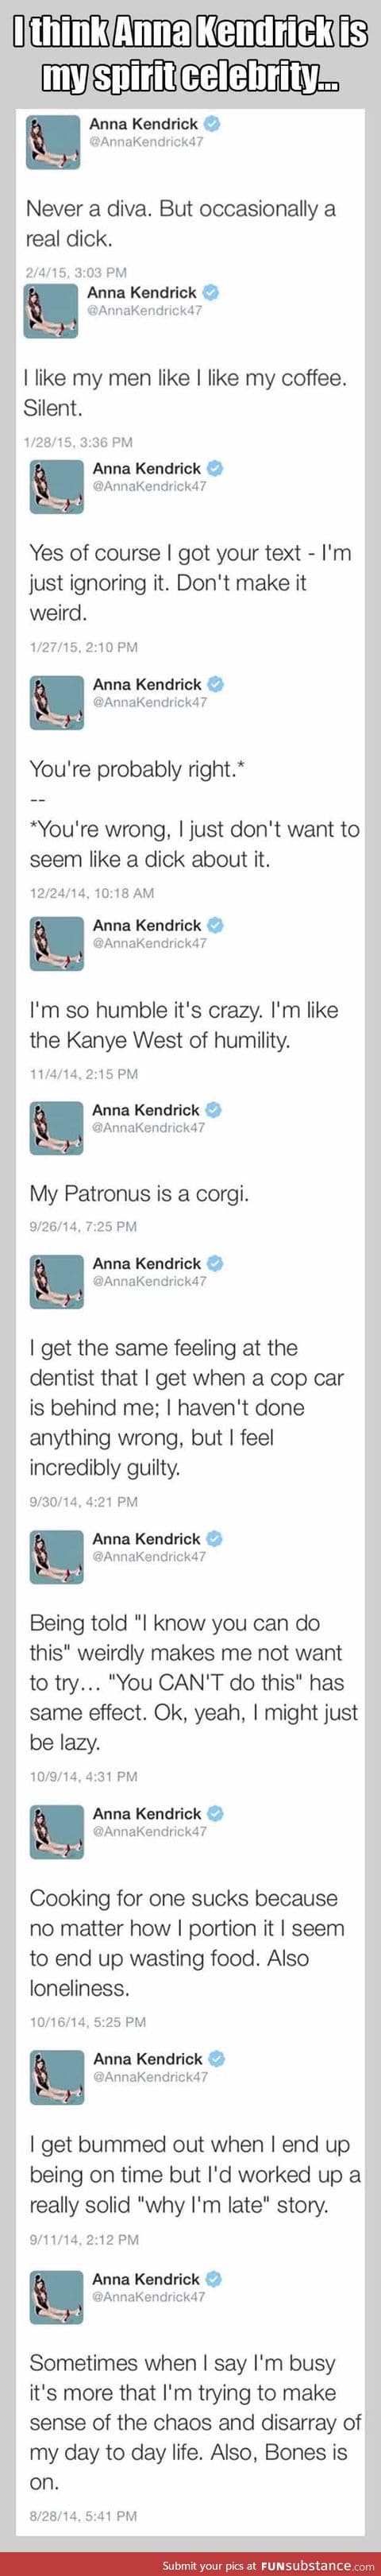 Anna Kendrick